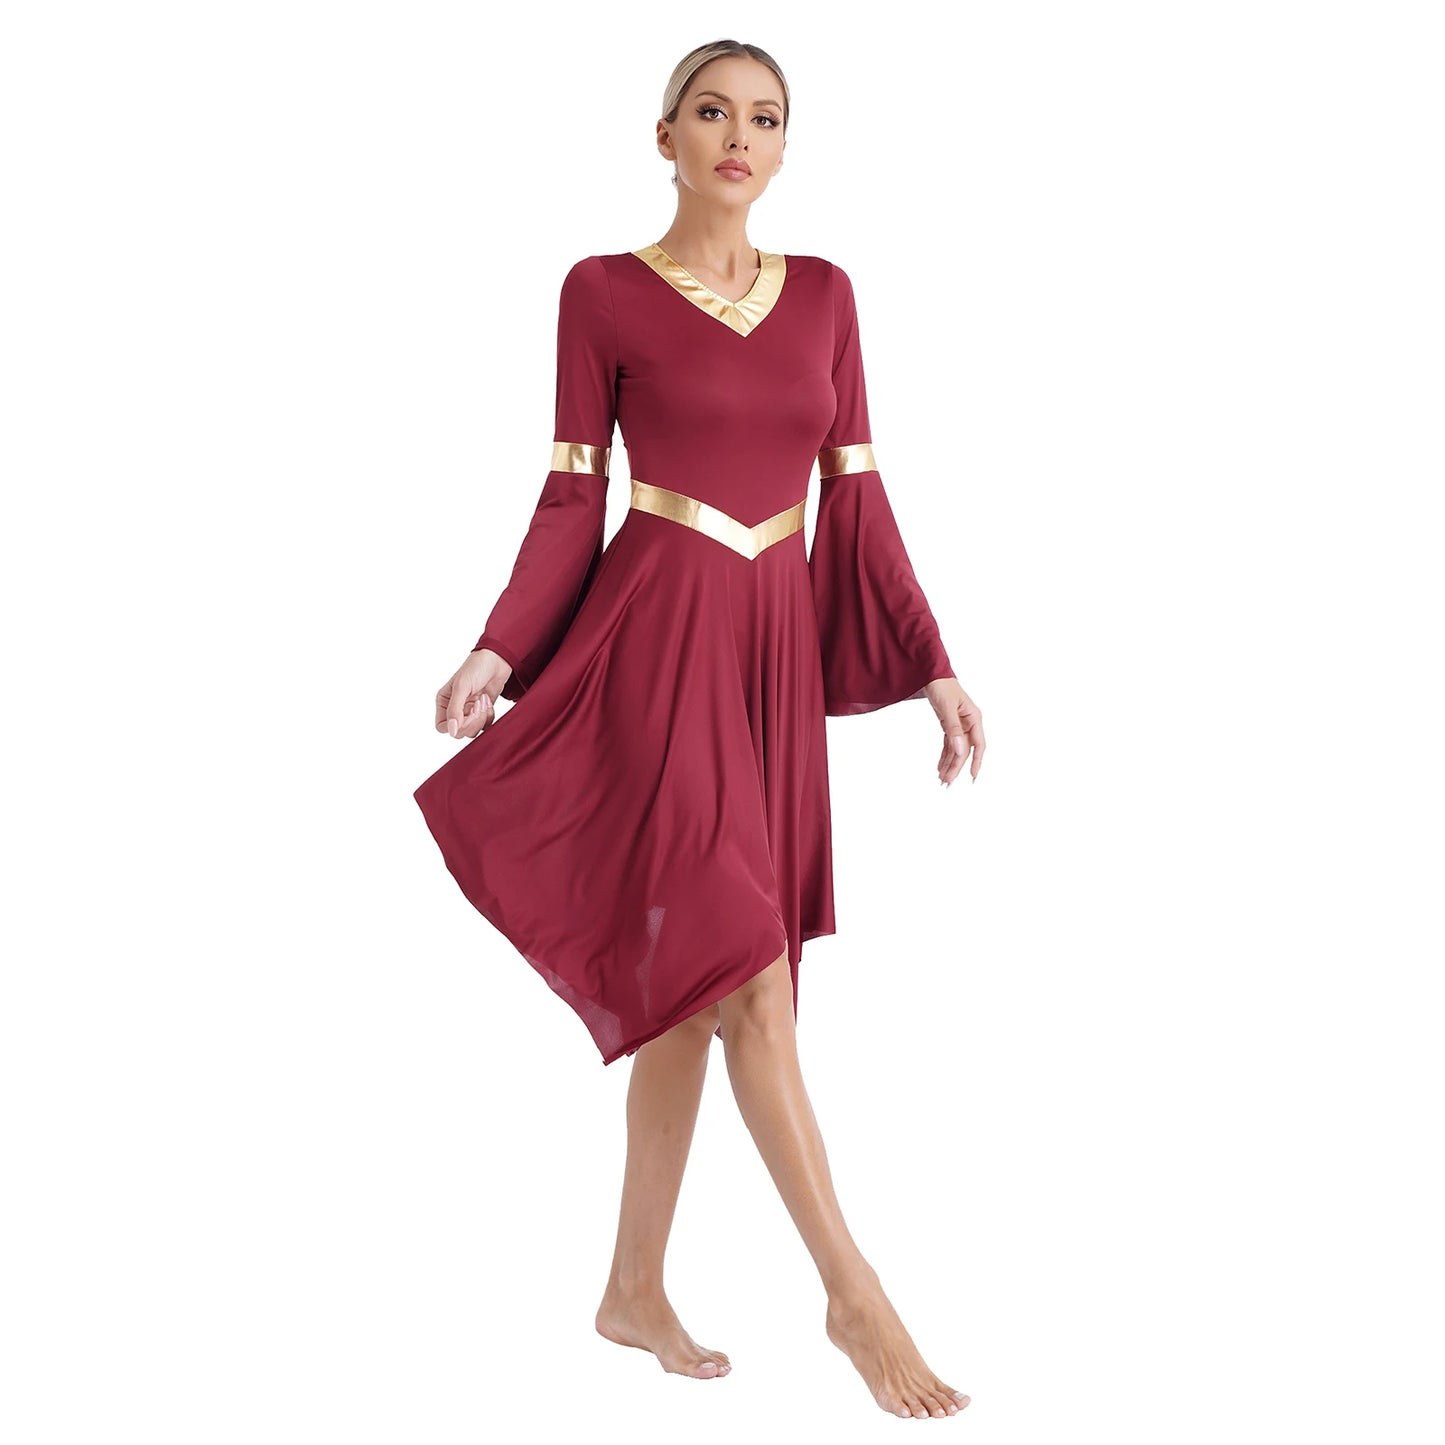 Womens Praise Liturgical Dress Metallic Contrast Color V Neck Flare Sleeve Asymmetrical Hem Dresses Church Worship Dancewear